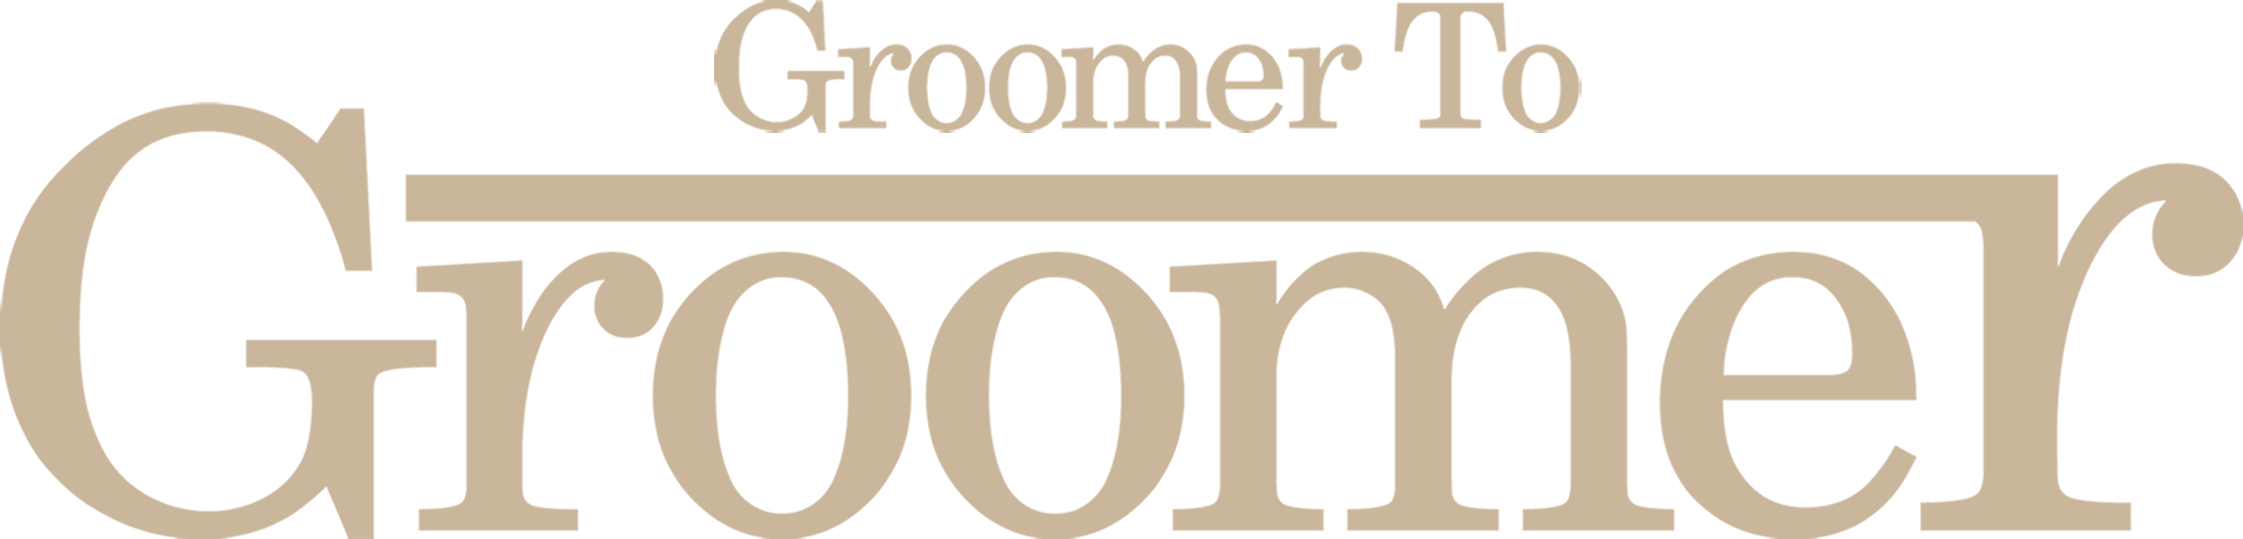 Groomer to groomer logo